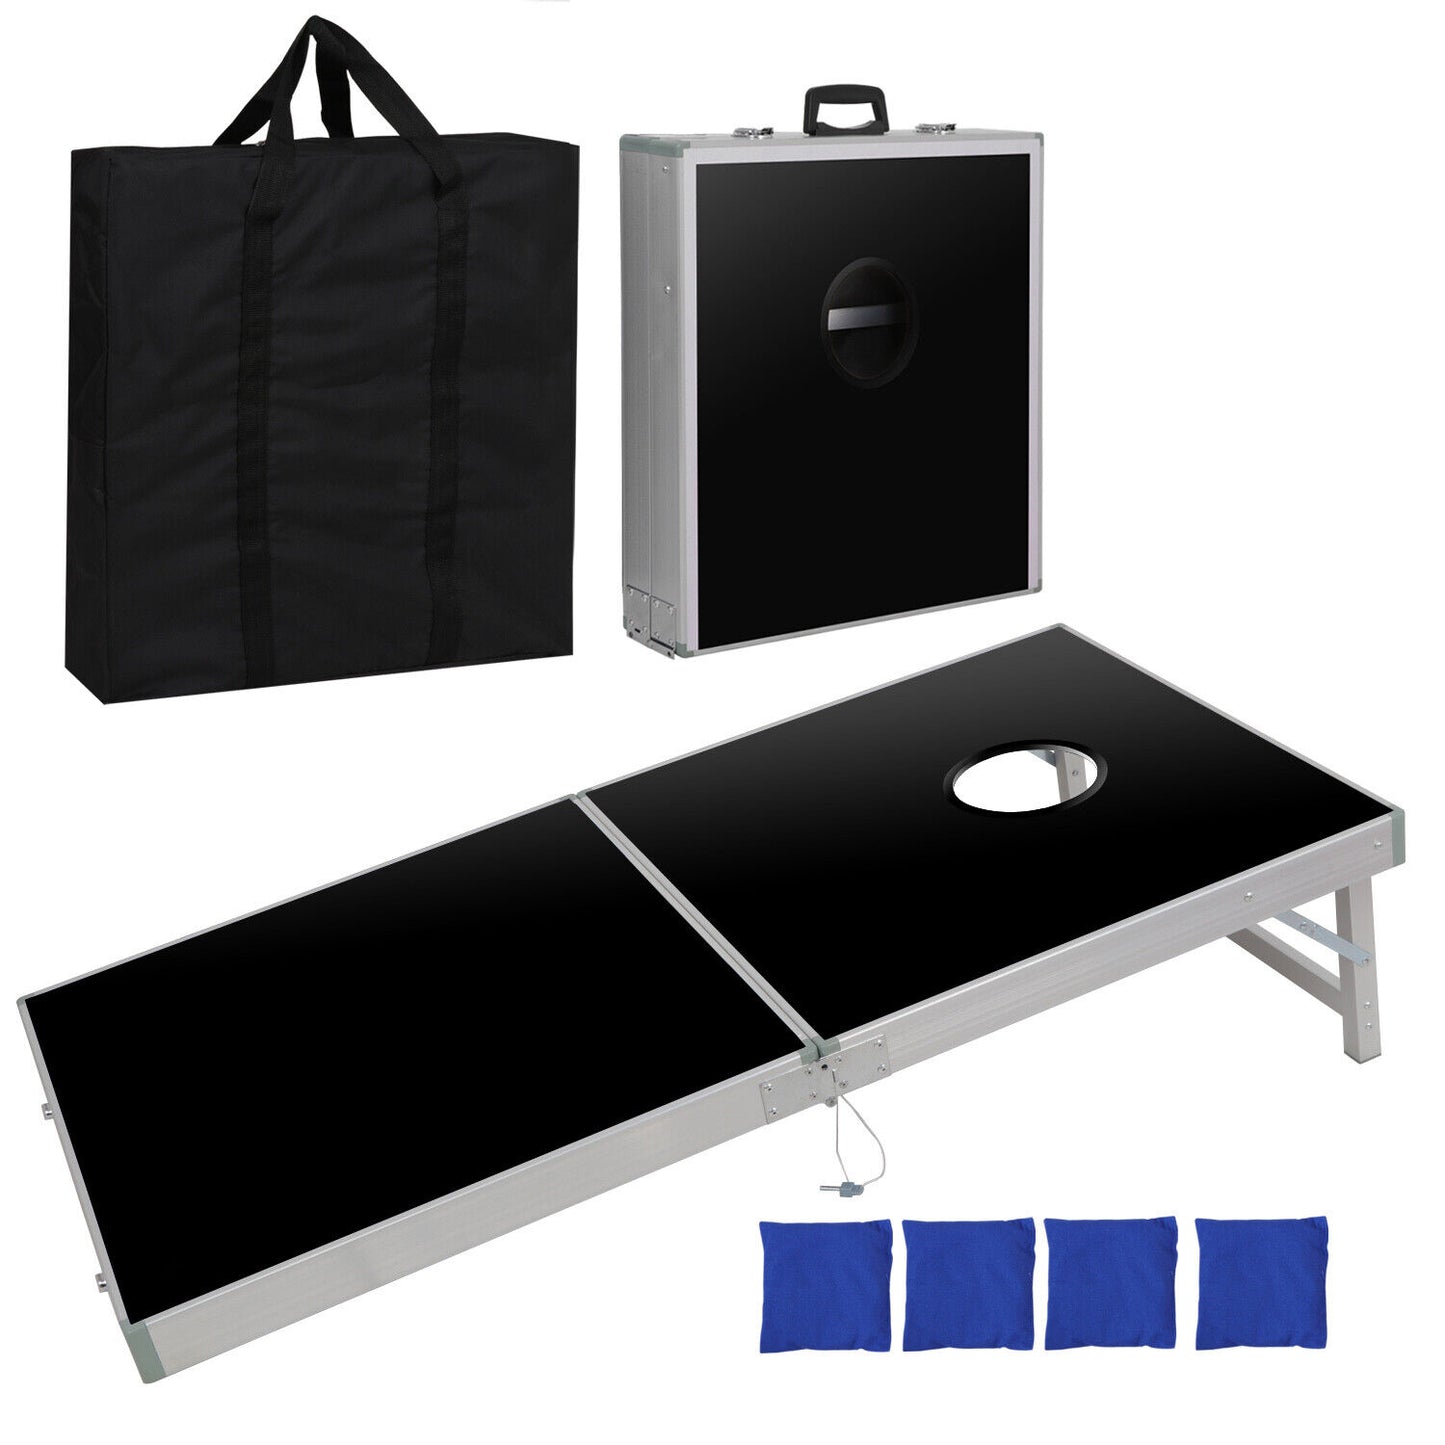 Aluminium Cornhole Pro Regulation Size Bean Bag Toss Game Set (Black) 4 x 2FT